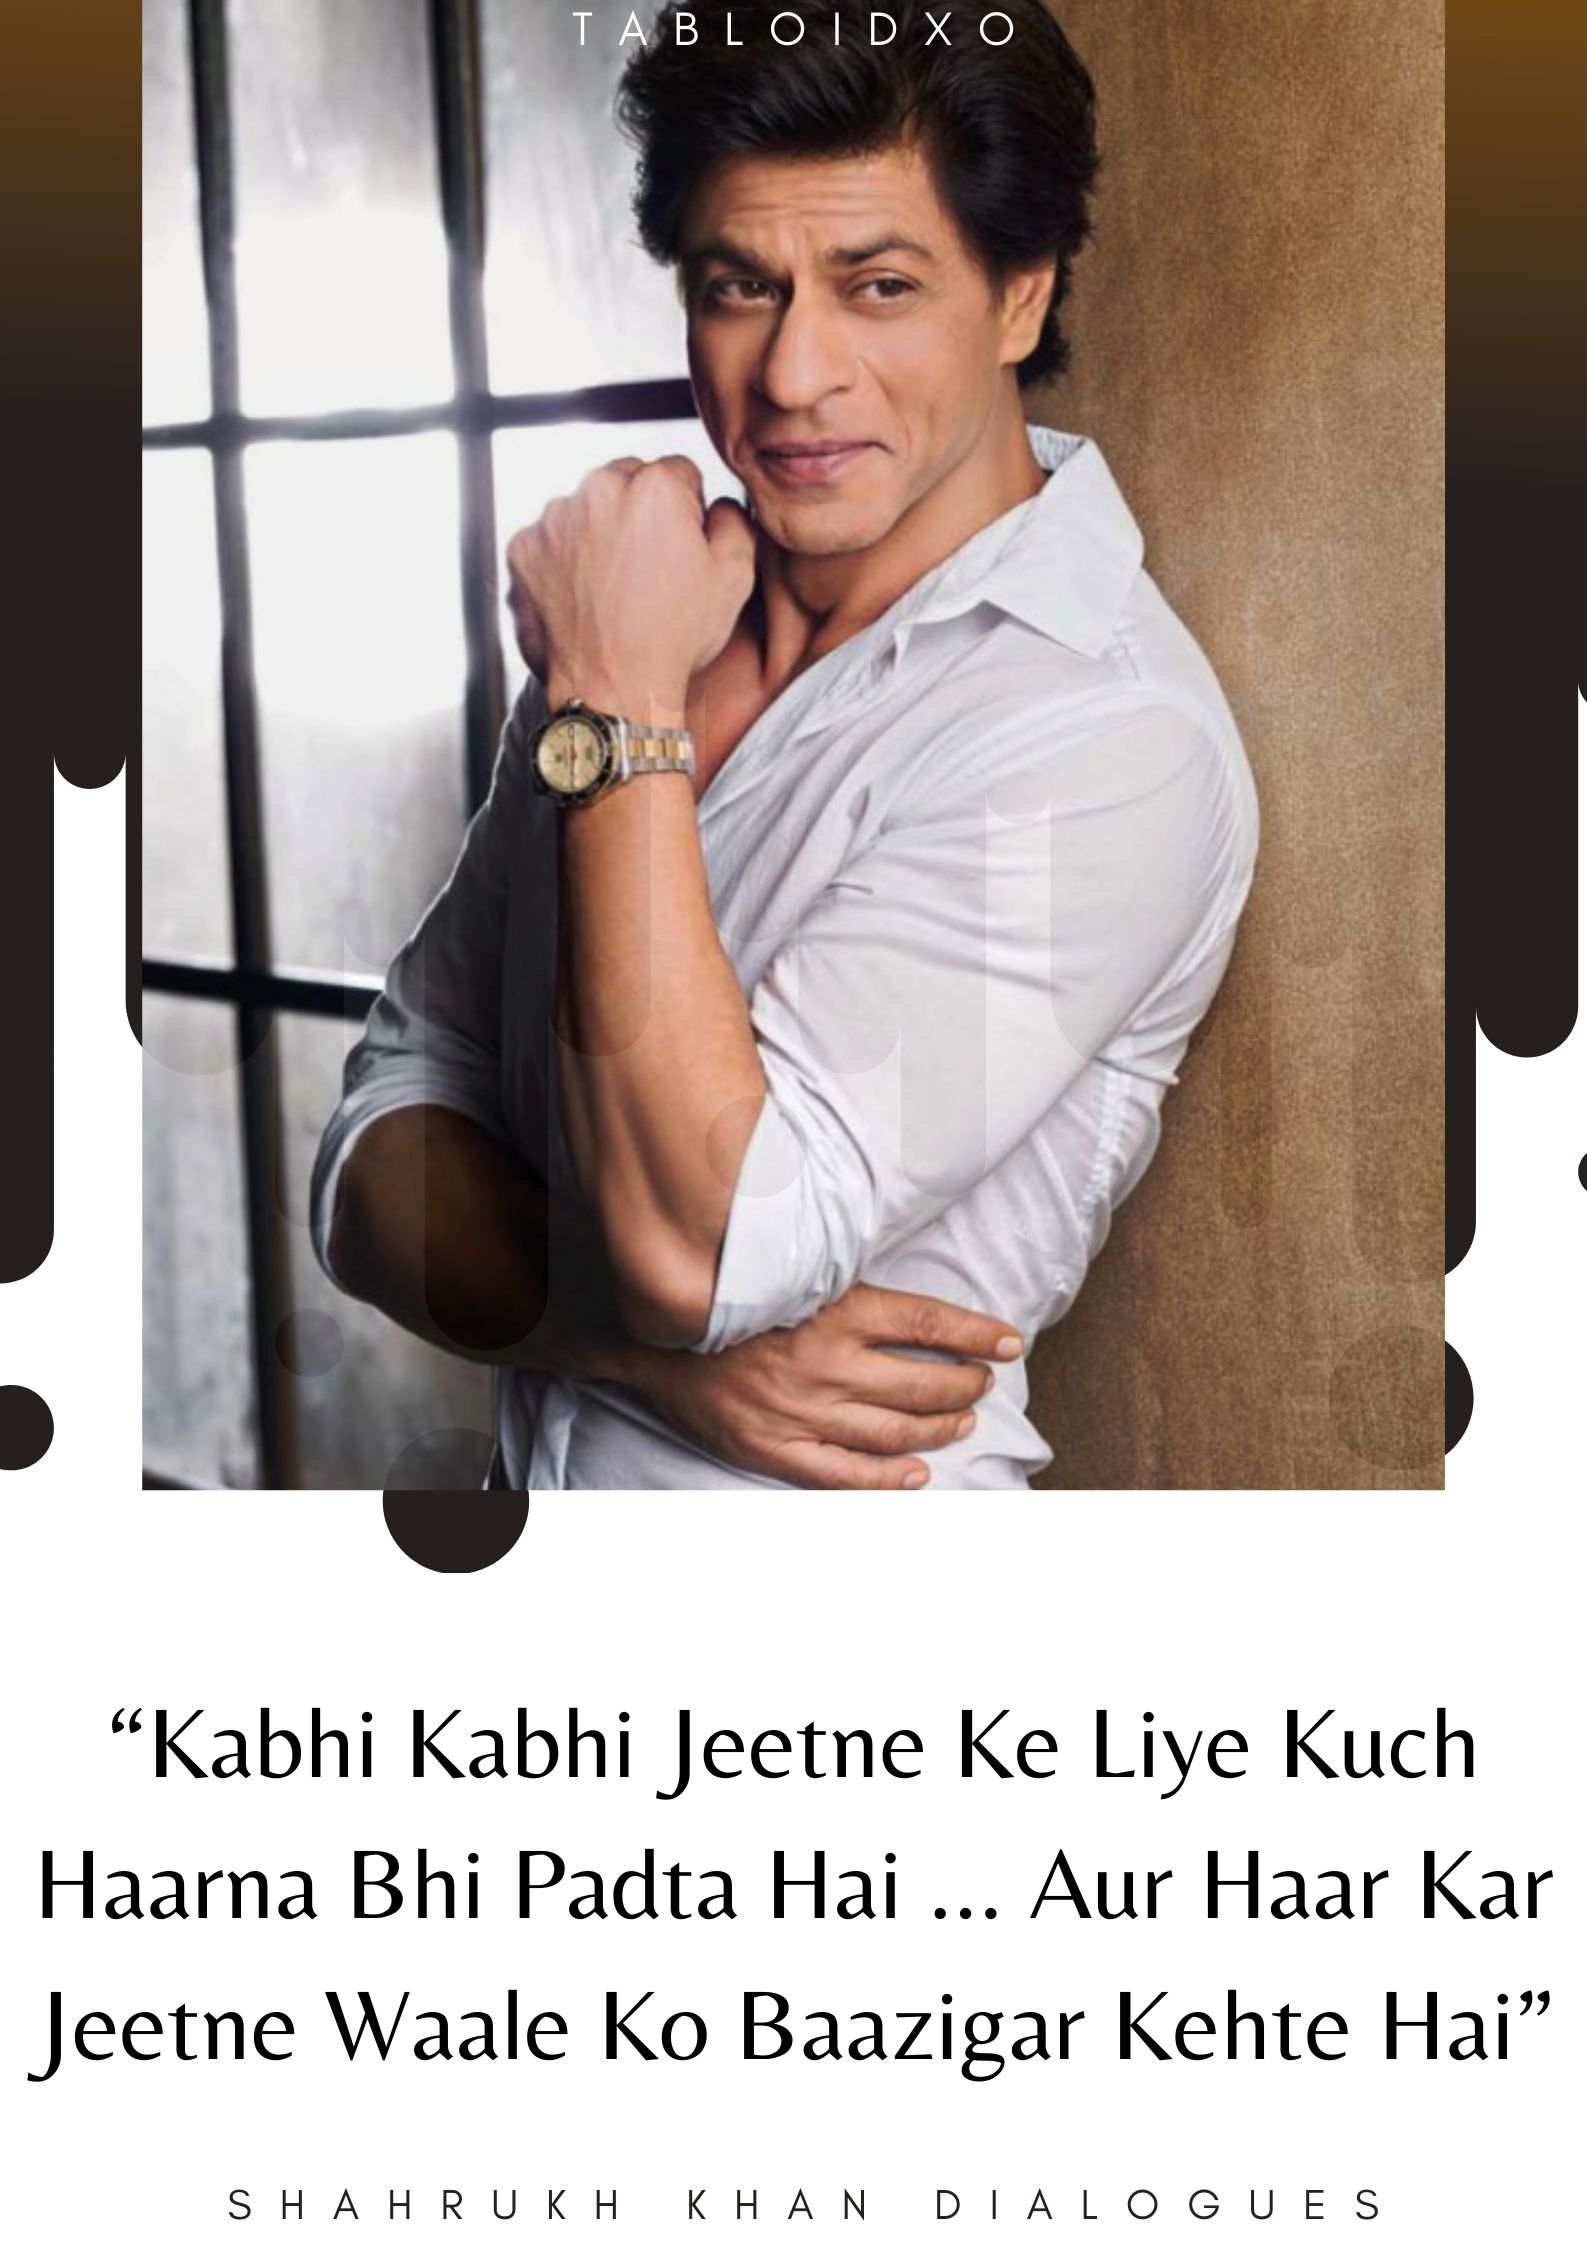 Shahrukh khan dialogues